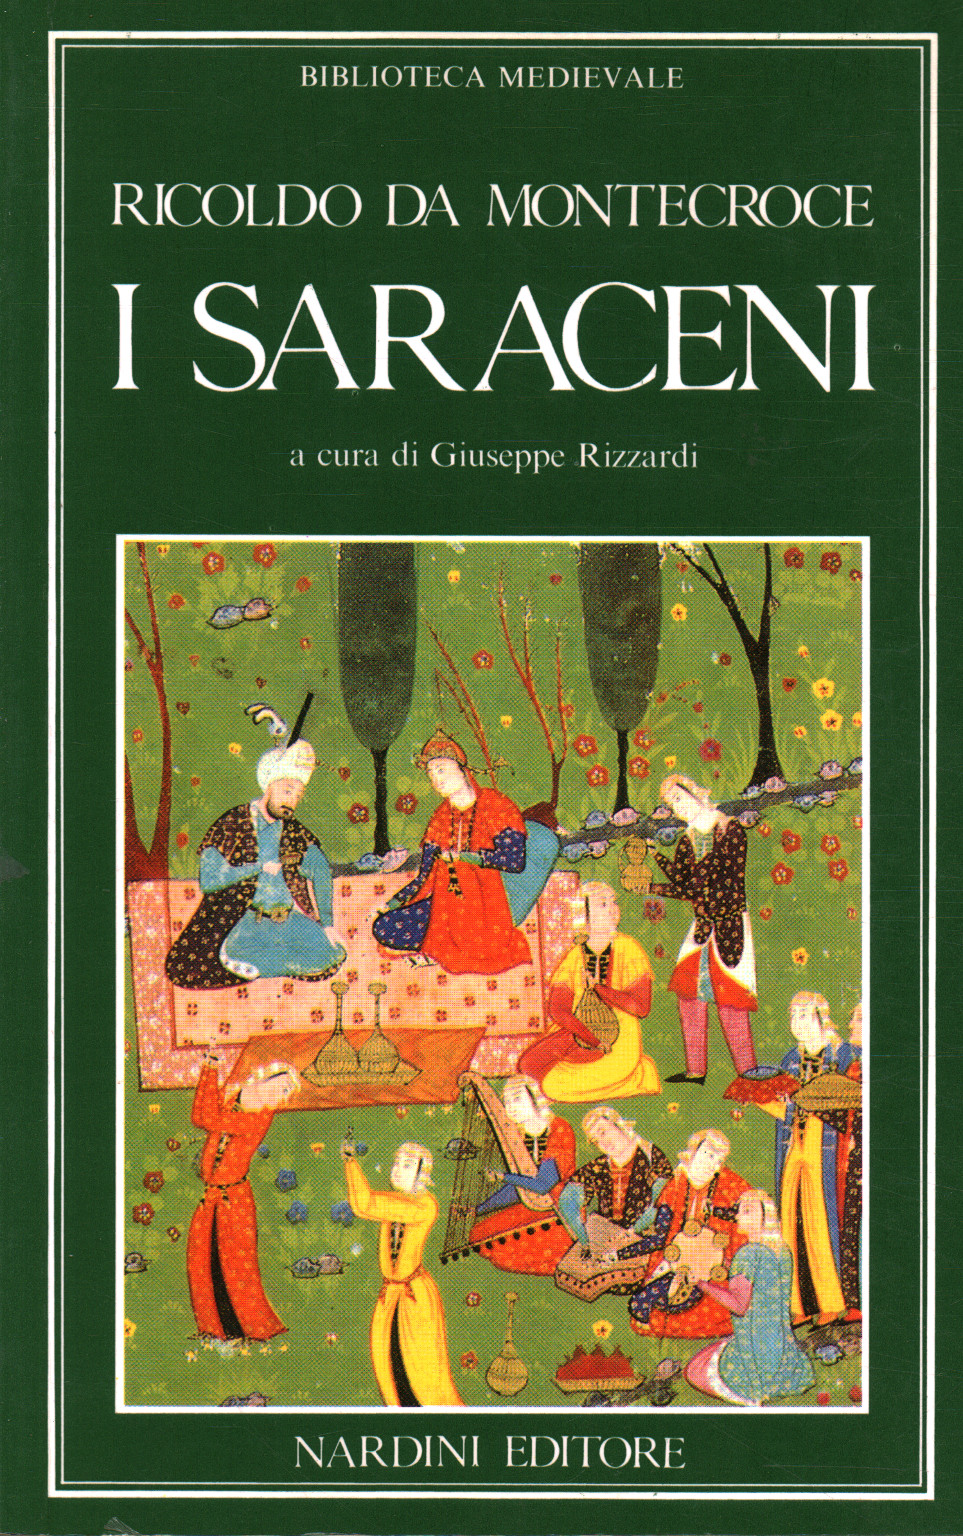 The Saracens